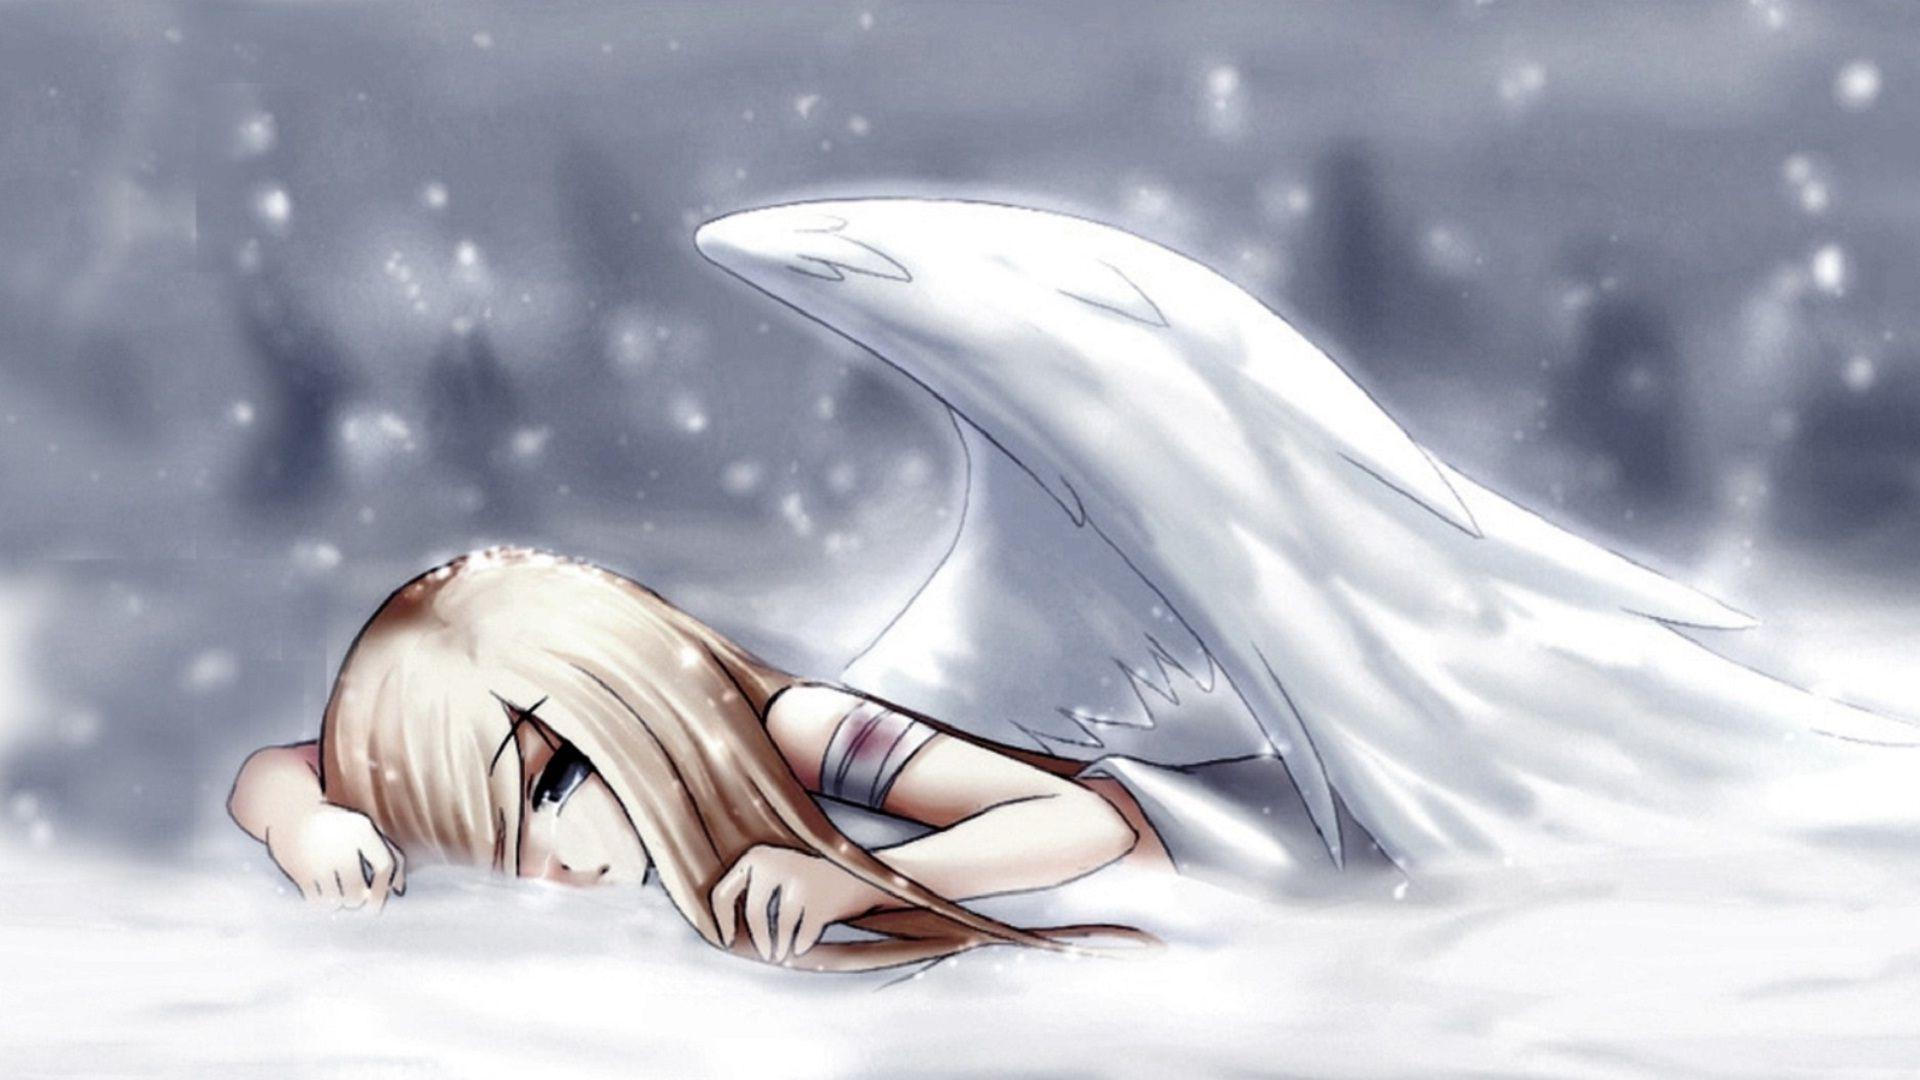 sad angel drawings anime